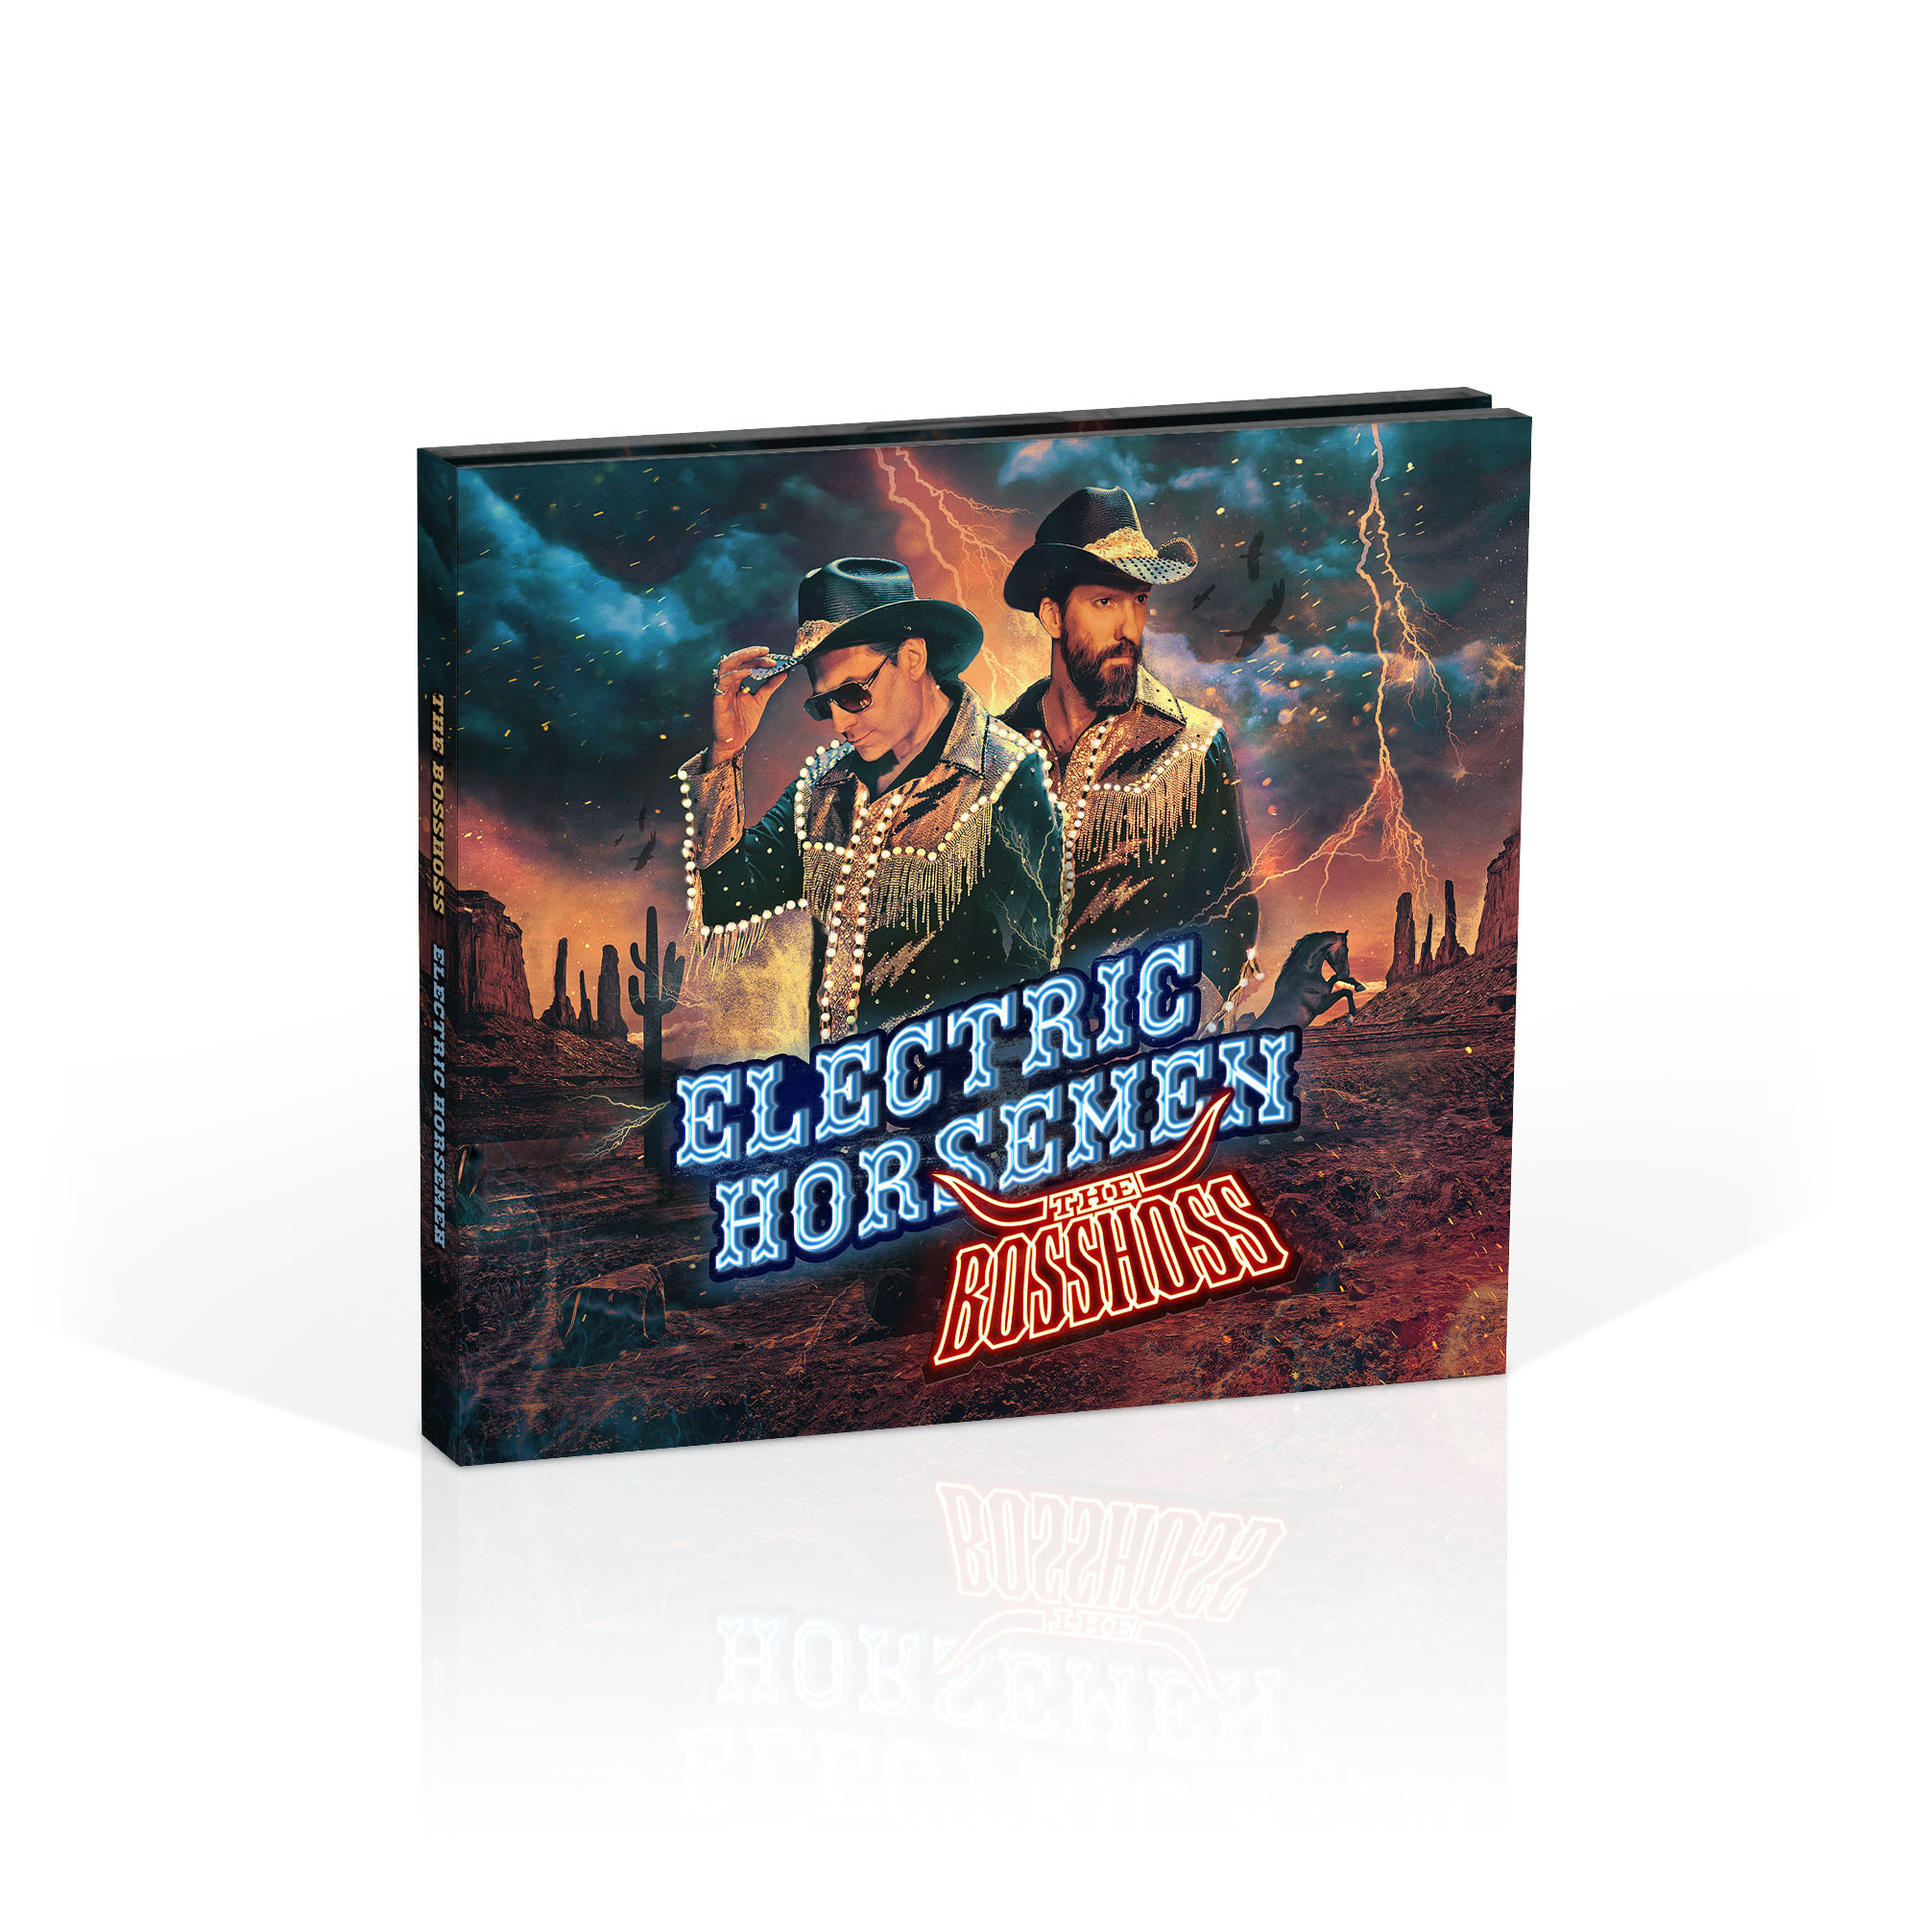 (CD) (Deluxe The Horsemen Electric Edt.) - BossHoss -